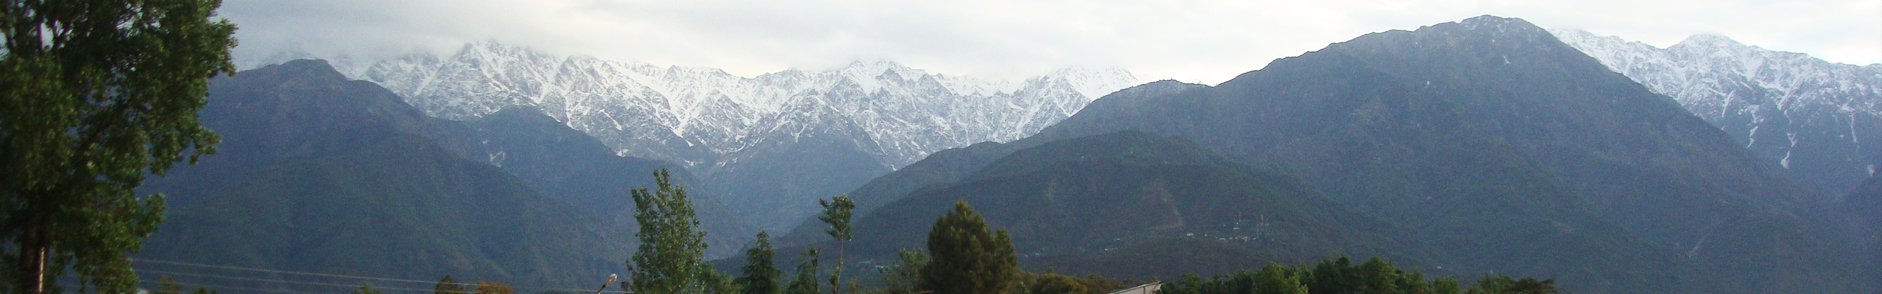 Andretta Artists Village Palampur, Himachal